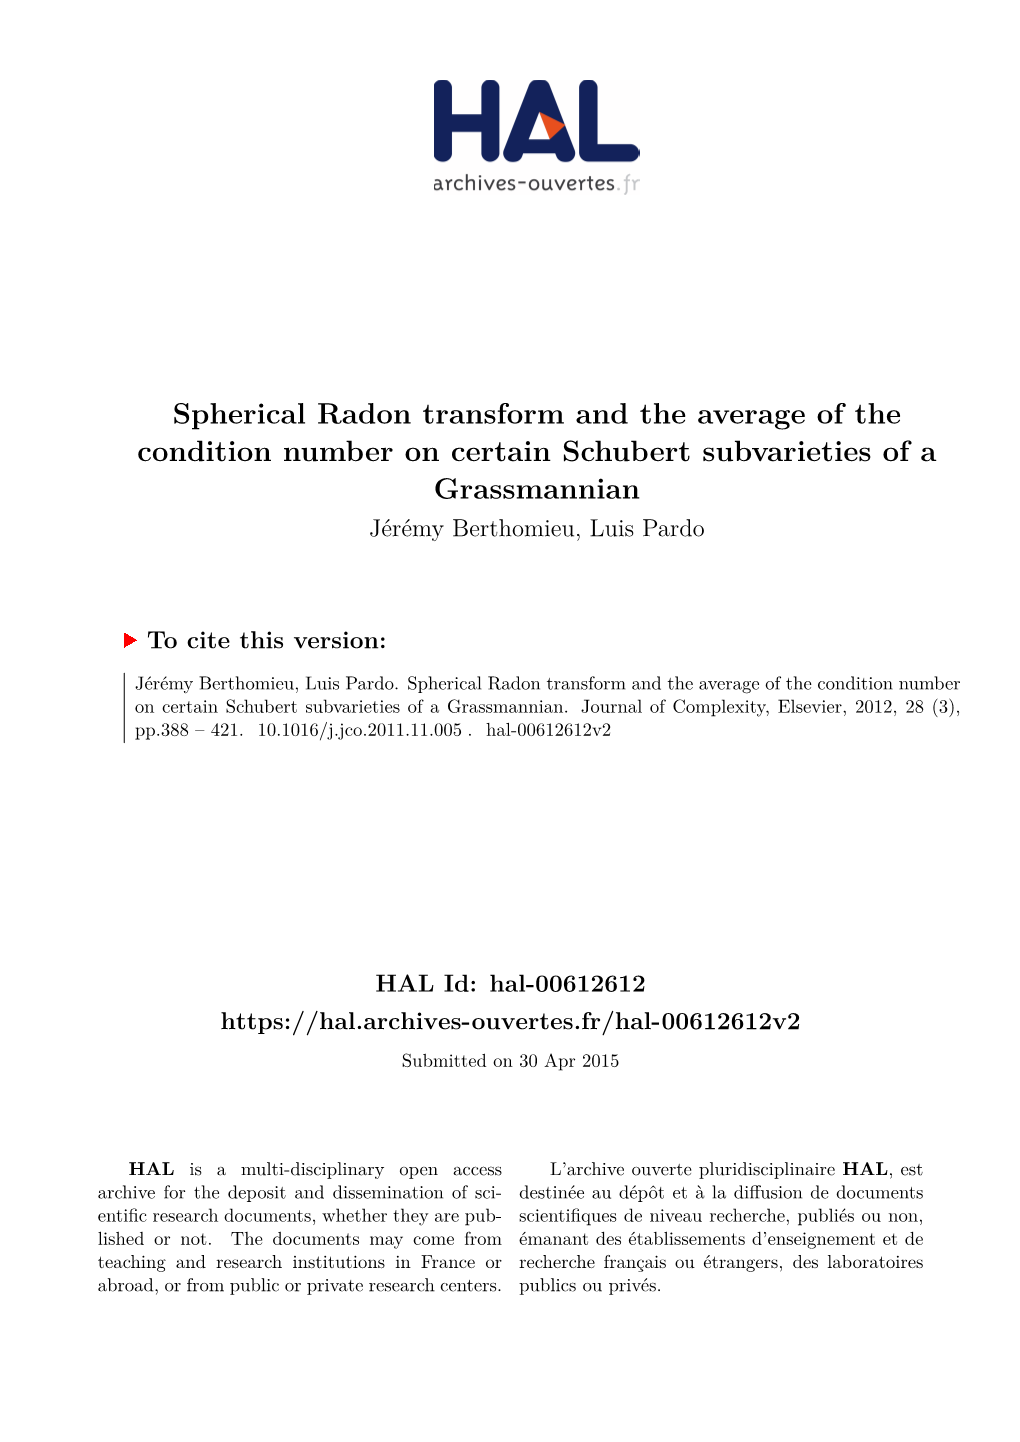 Spherical Radon Transform and the Average of the Condition Number on Certain Schubert Subvarieties of a Grassmannian Jérémy Berthomieu, Luis Pardo